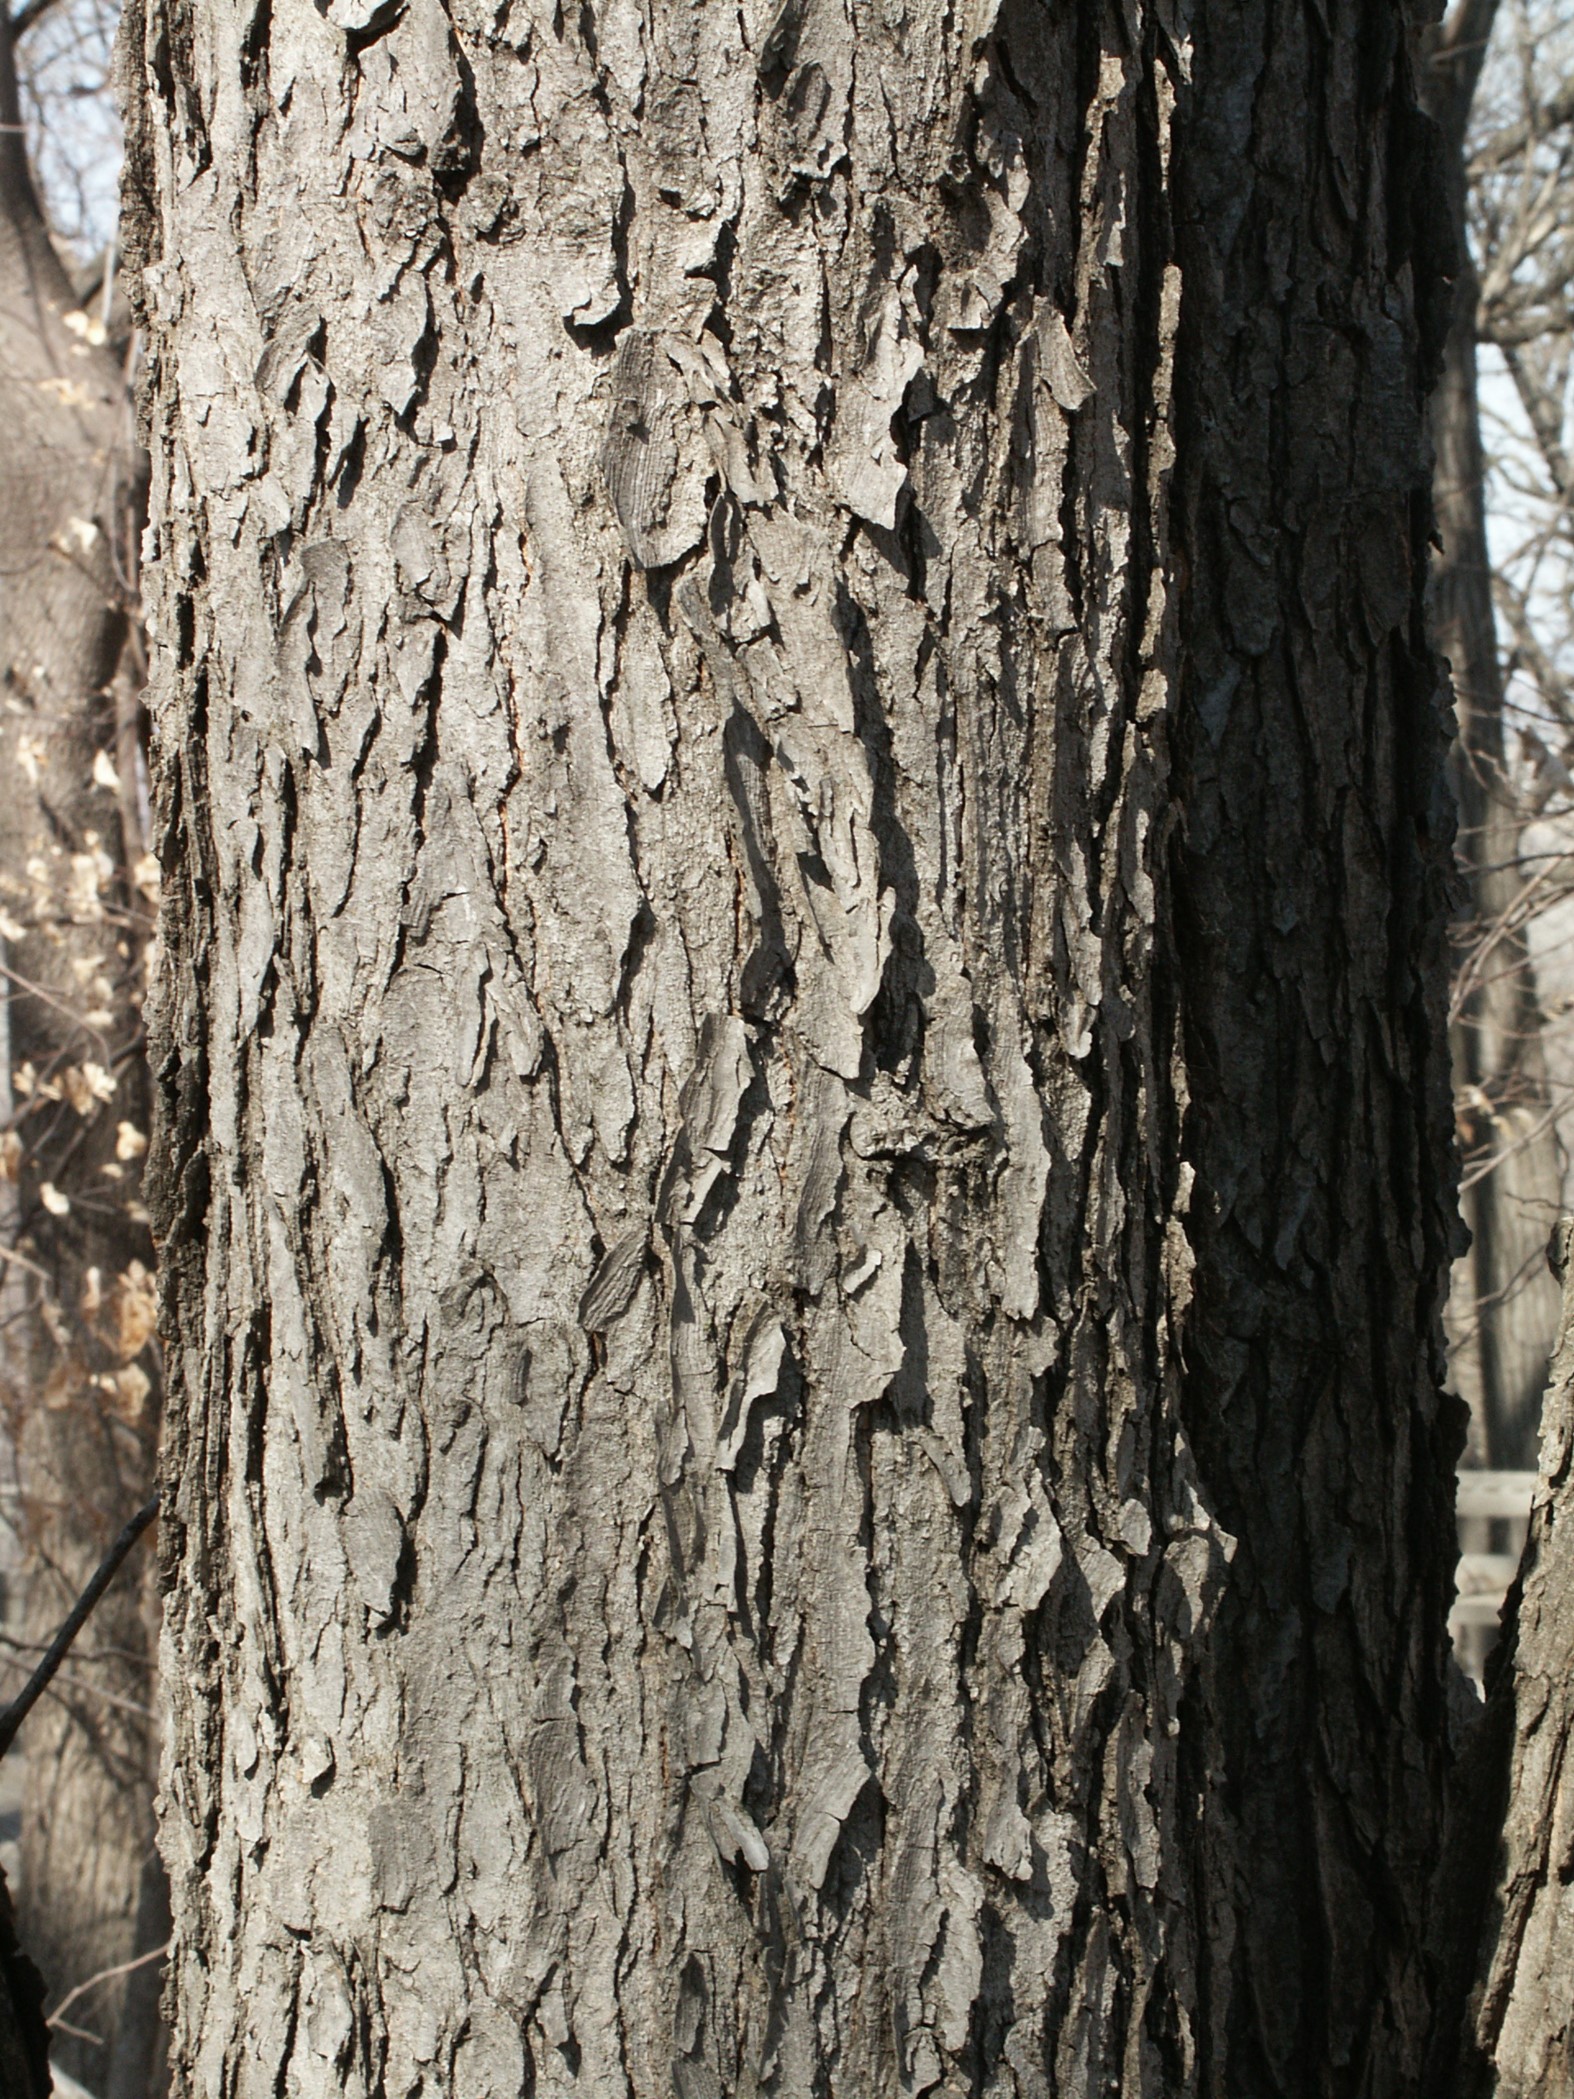 Kentucky coffeetree bark